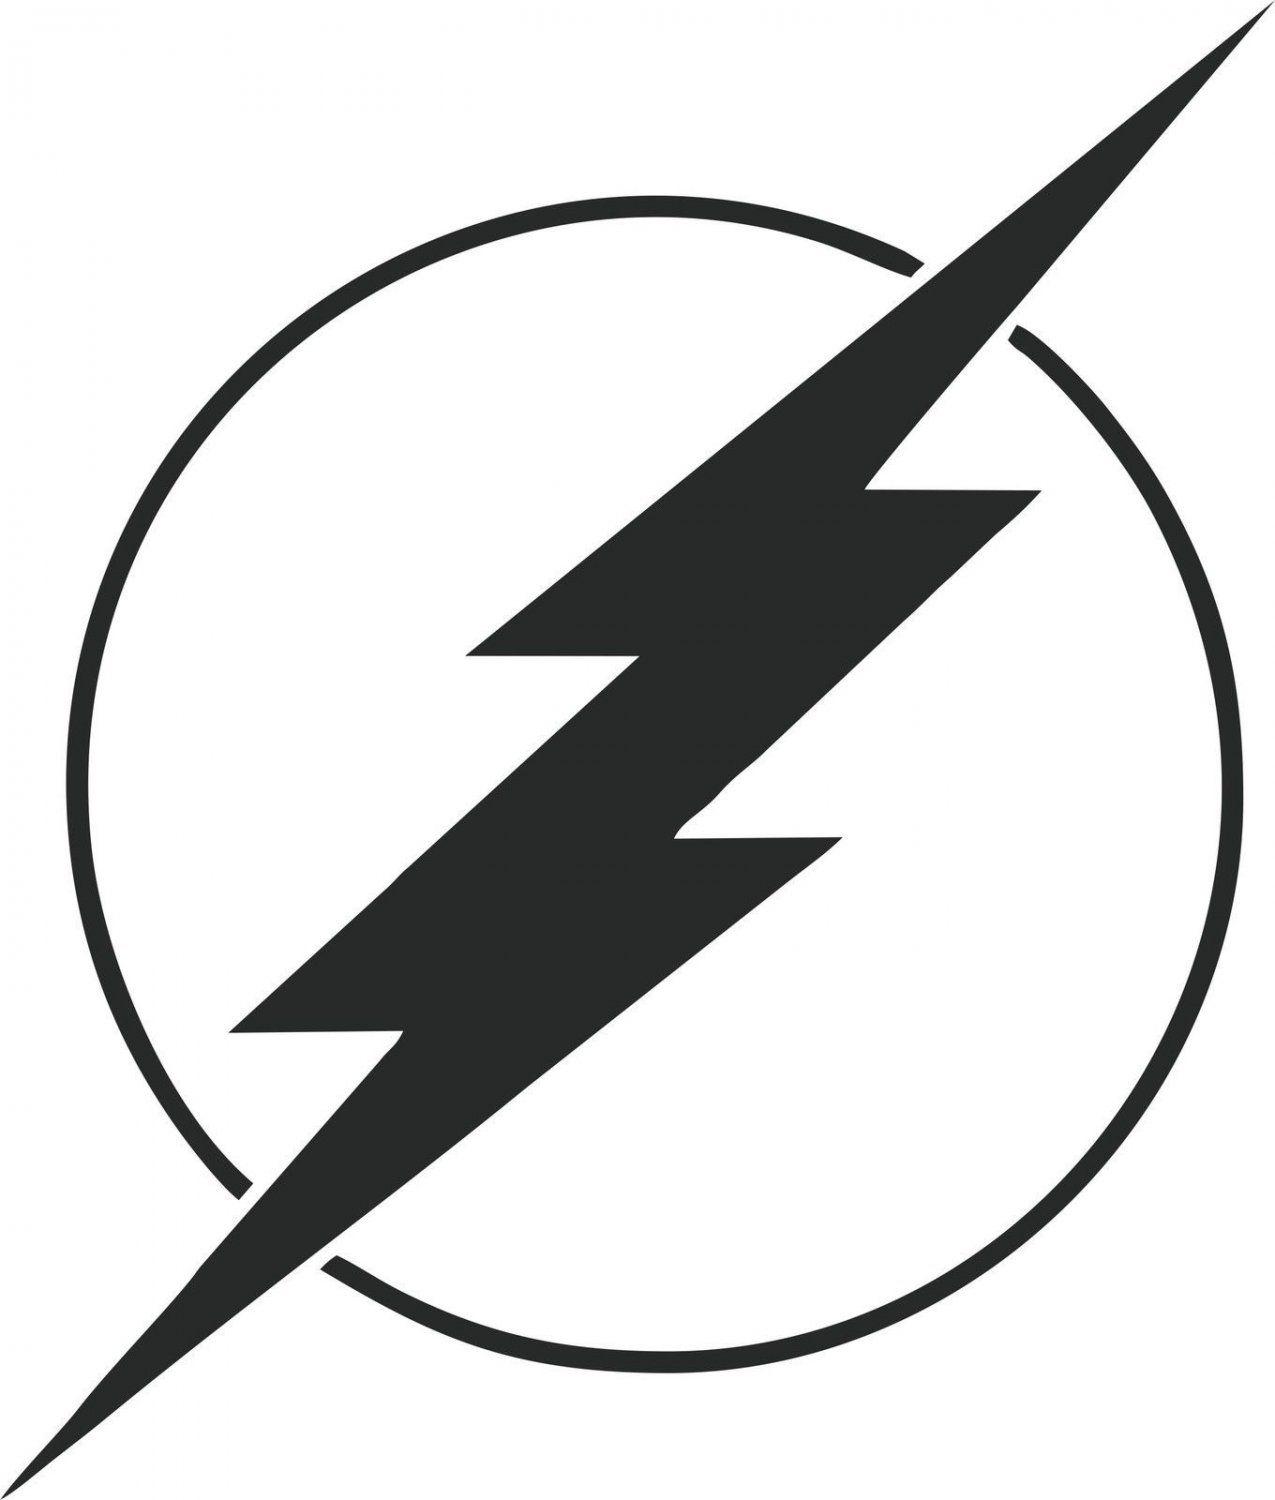 Circle with Lightning Bolt Car Logo - Free Lightning Bolt Logos, Download Free Clip Art, Free Clip Art